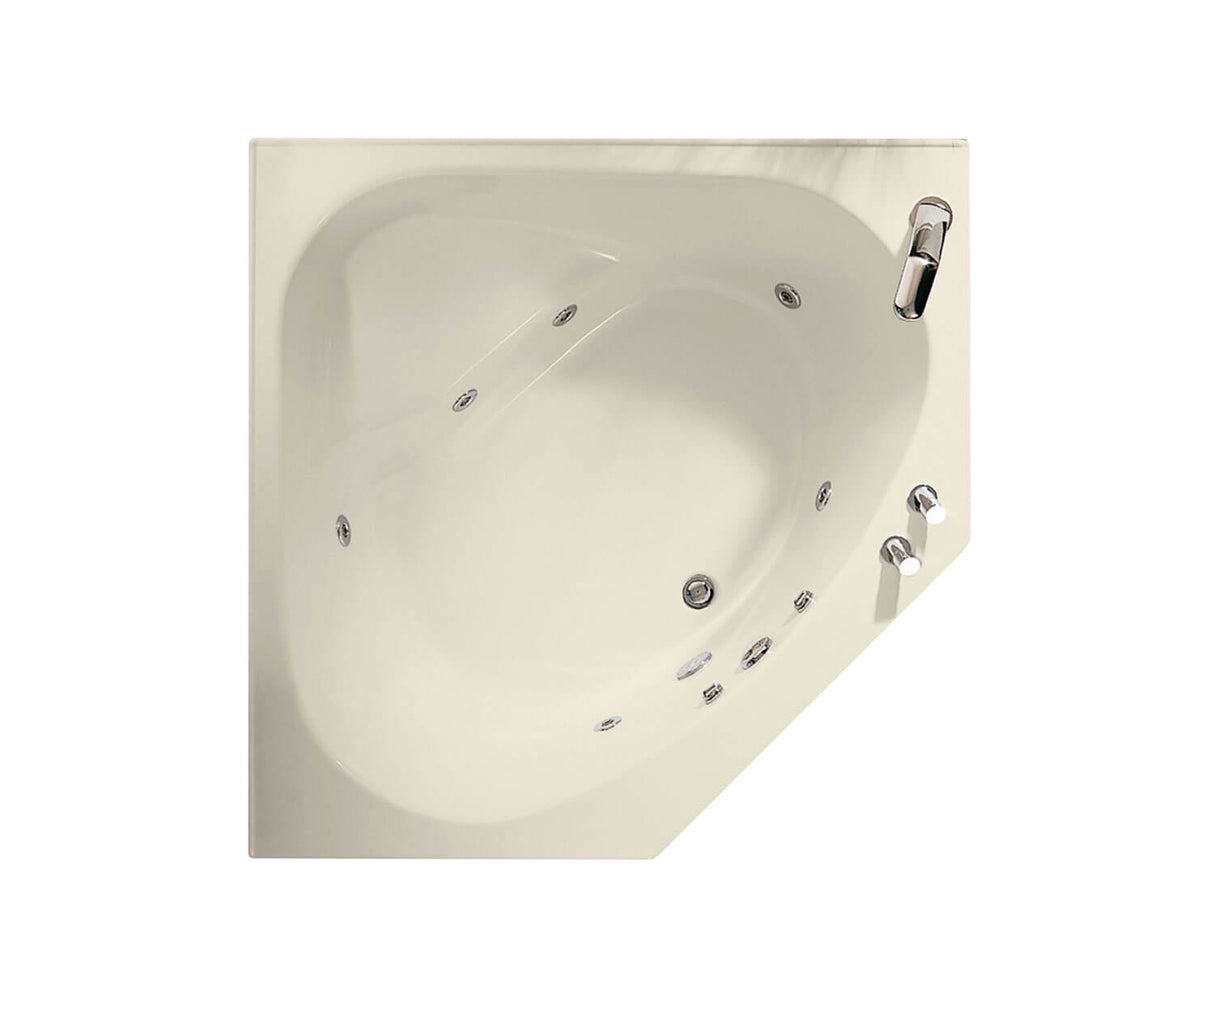 MAAX 100054-097-004 Tandem II 6060 Acrylic Corner Center Drain Combined Whirlpool & Aeroeffect Bathtub in Bone